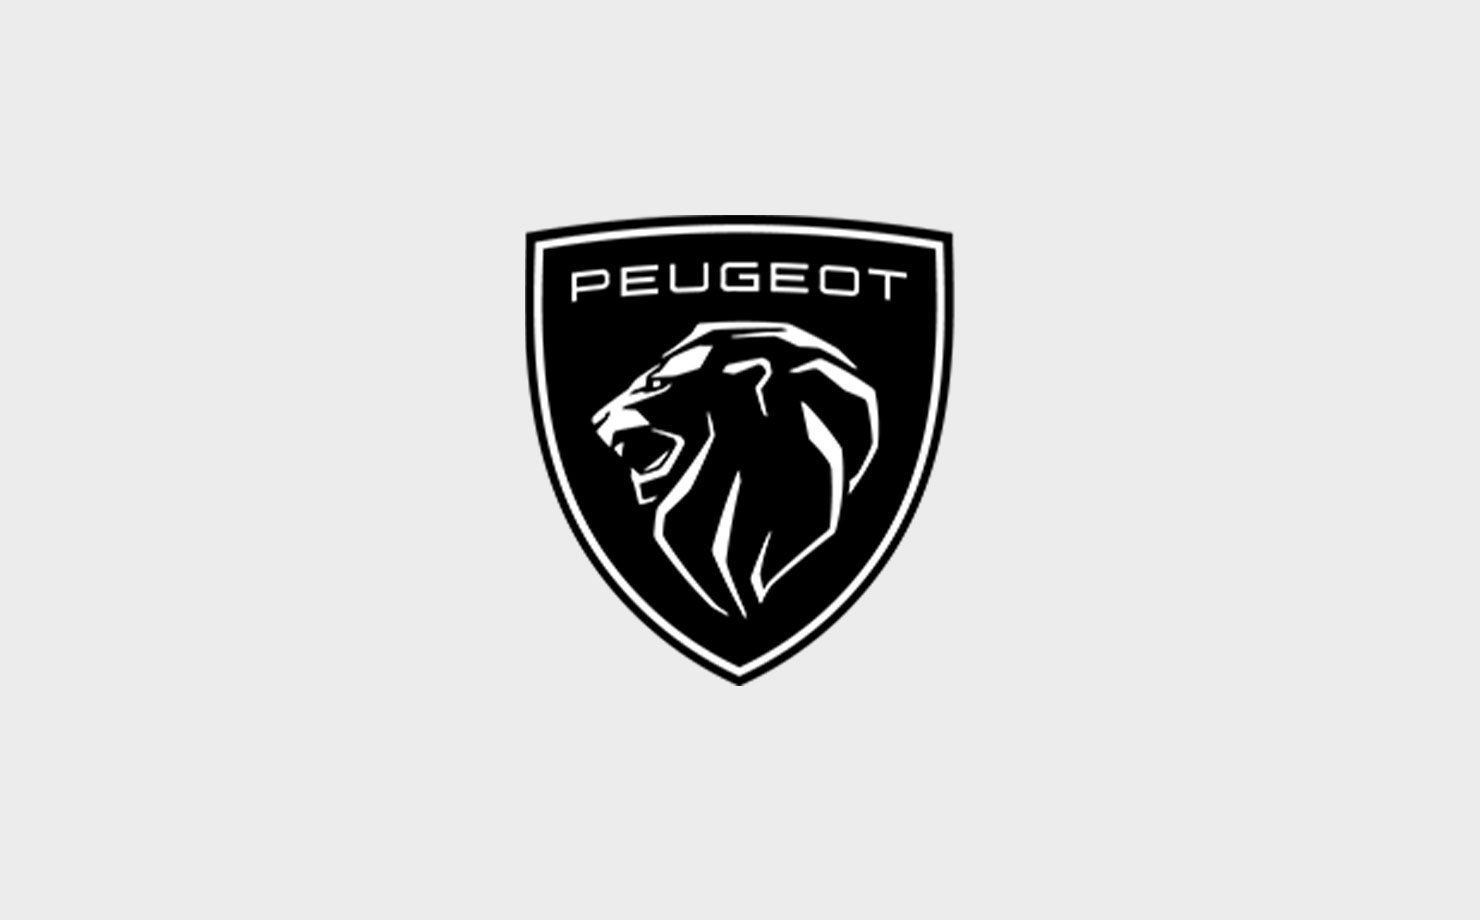 Image of Peugeot logo